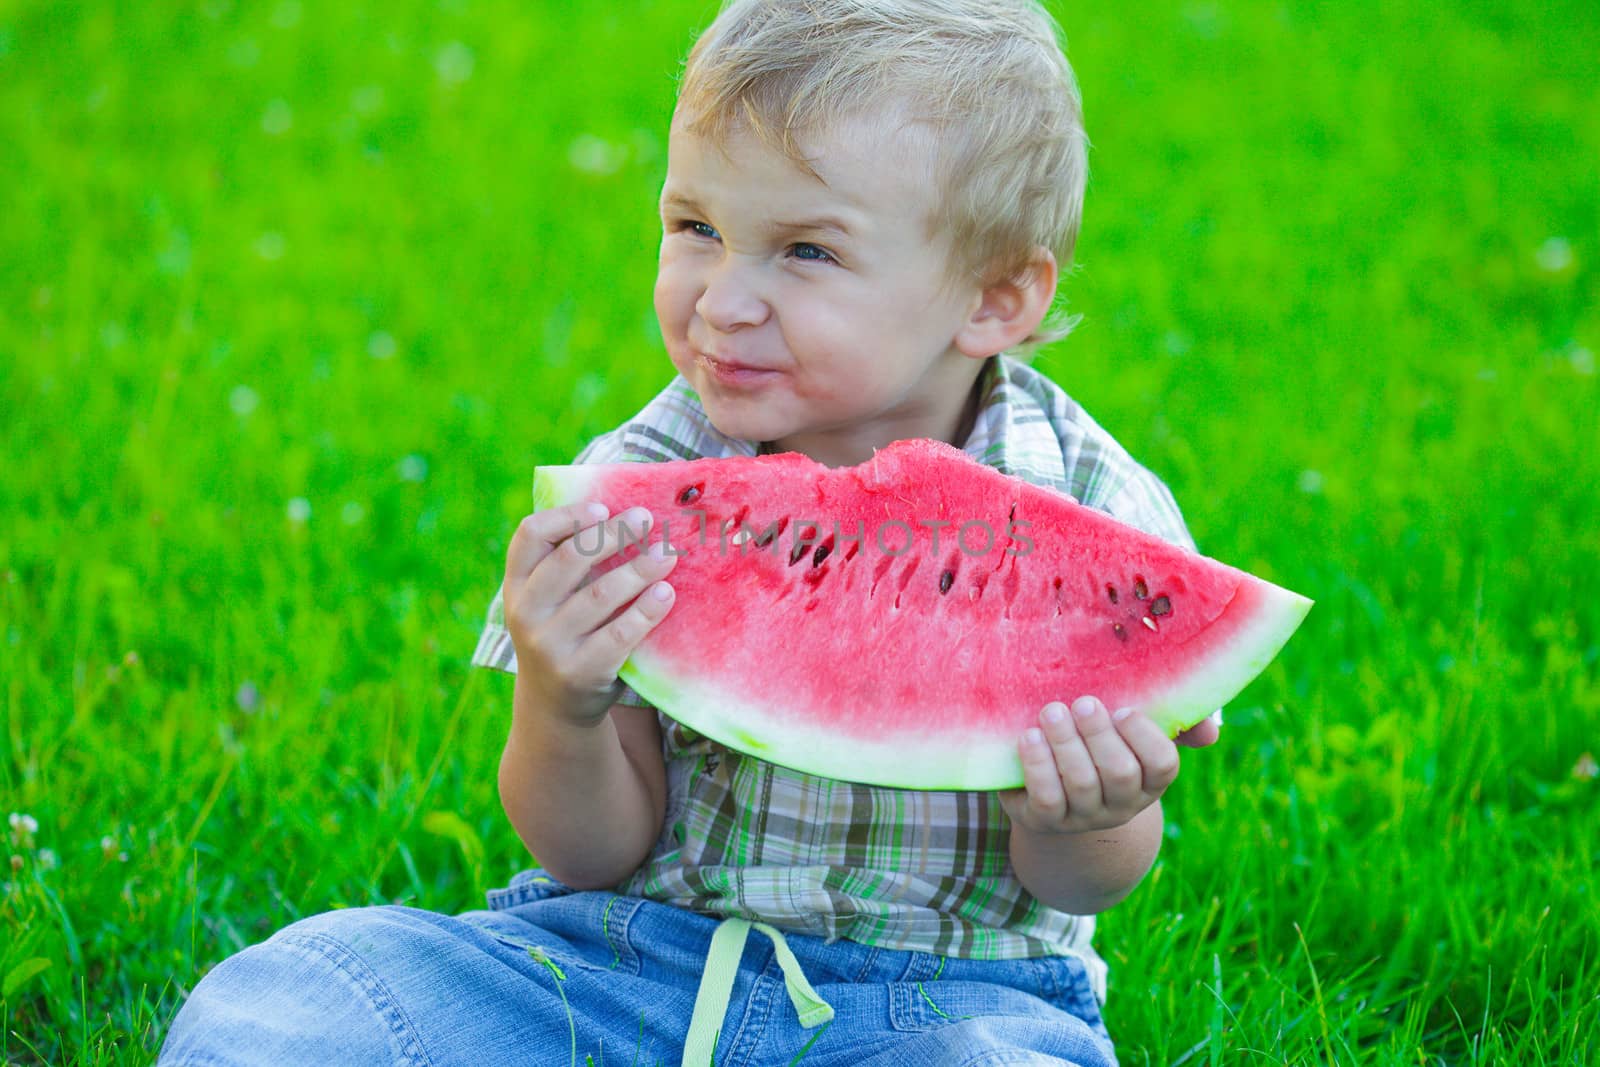 Kid with watermelon by oksix